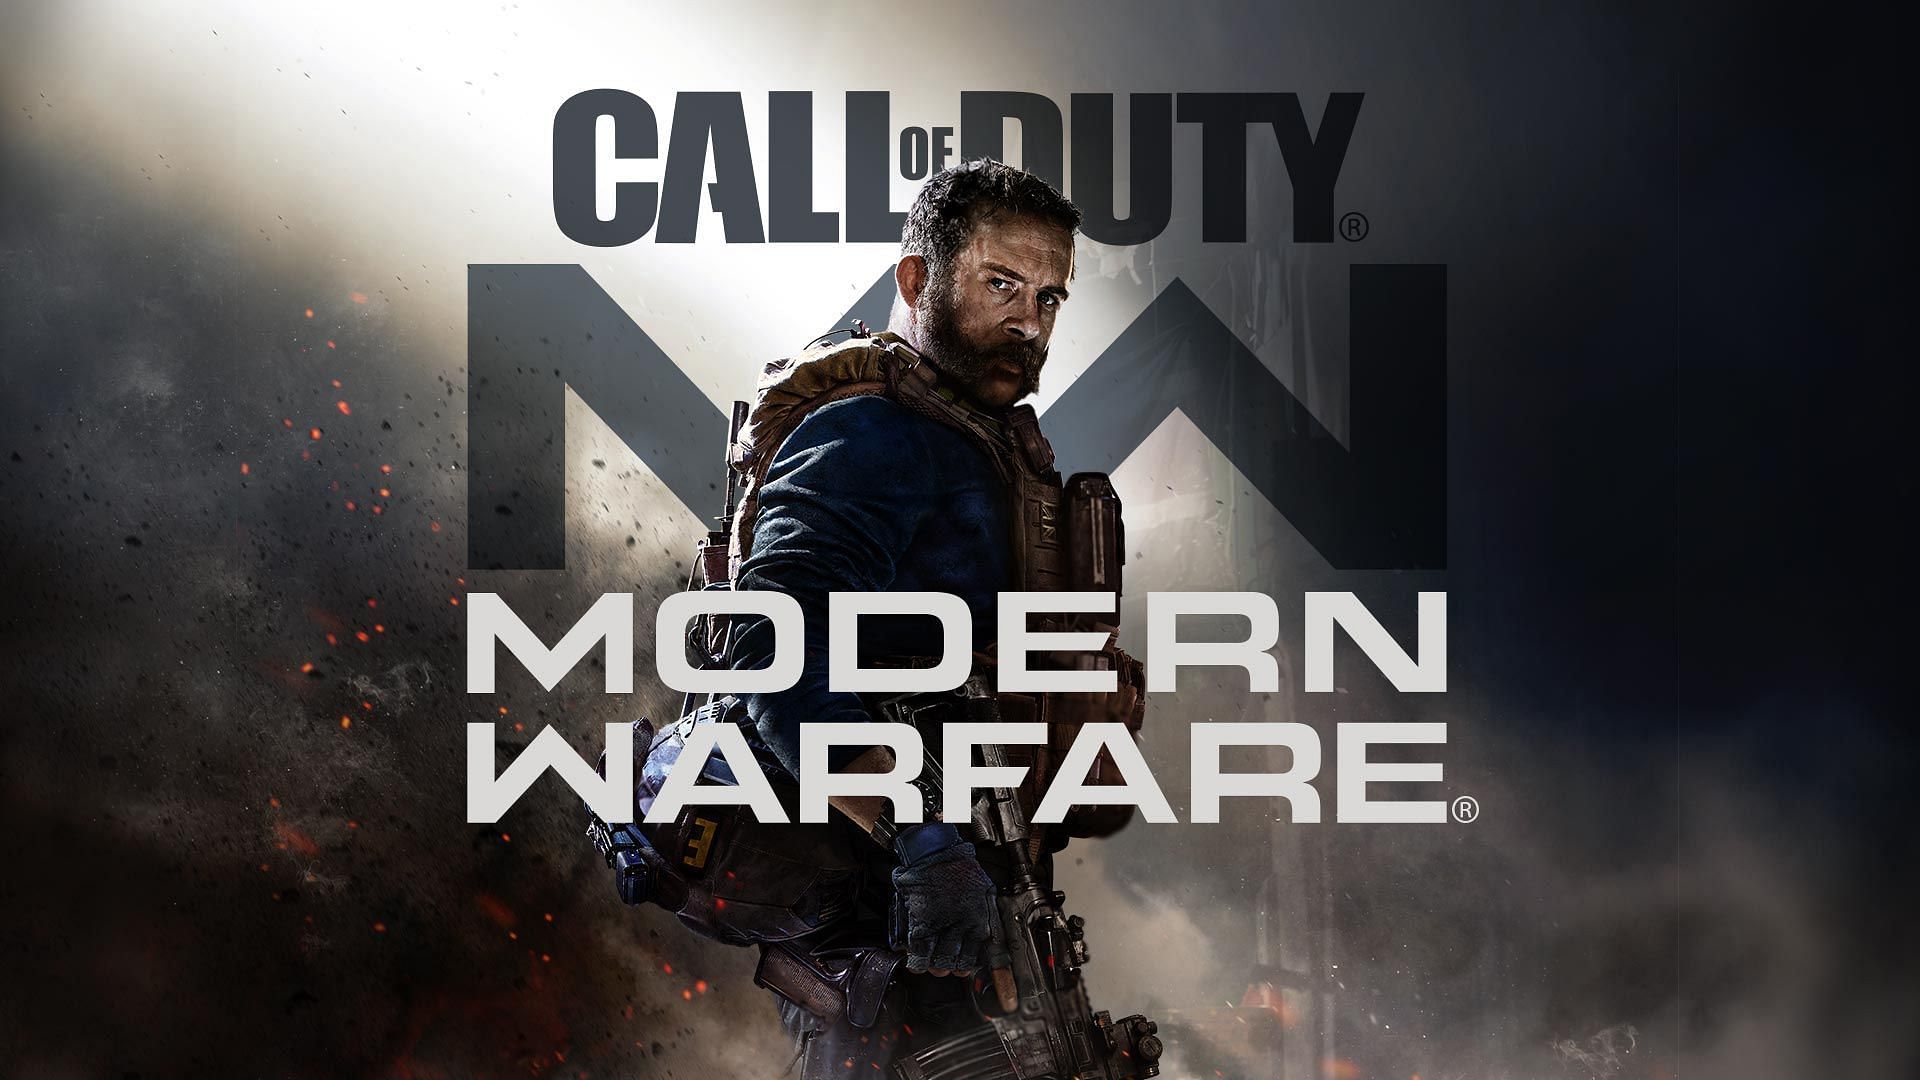 Modern Warfare (2019) (Image via Activision)